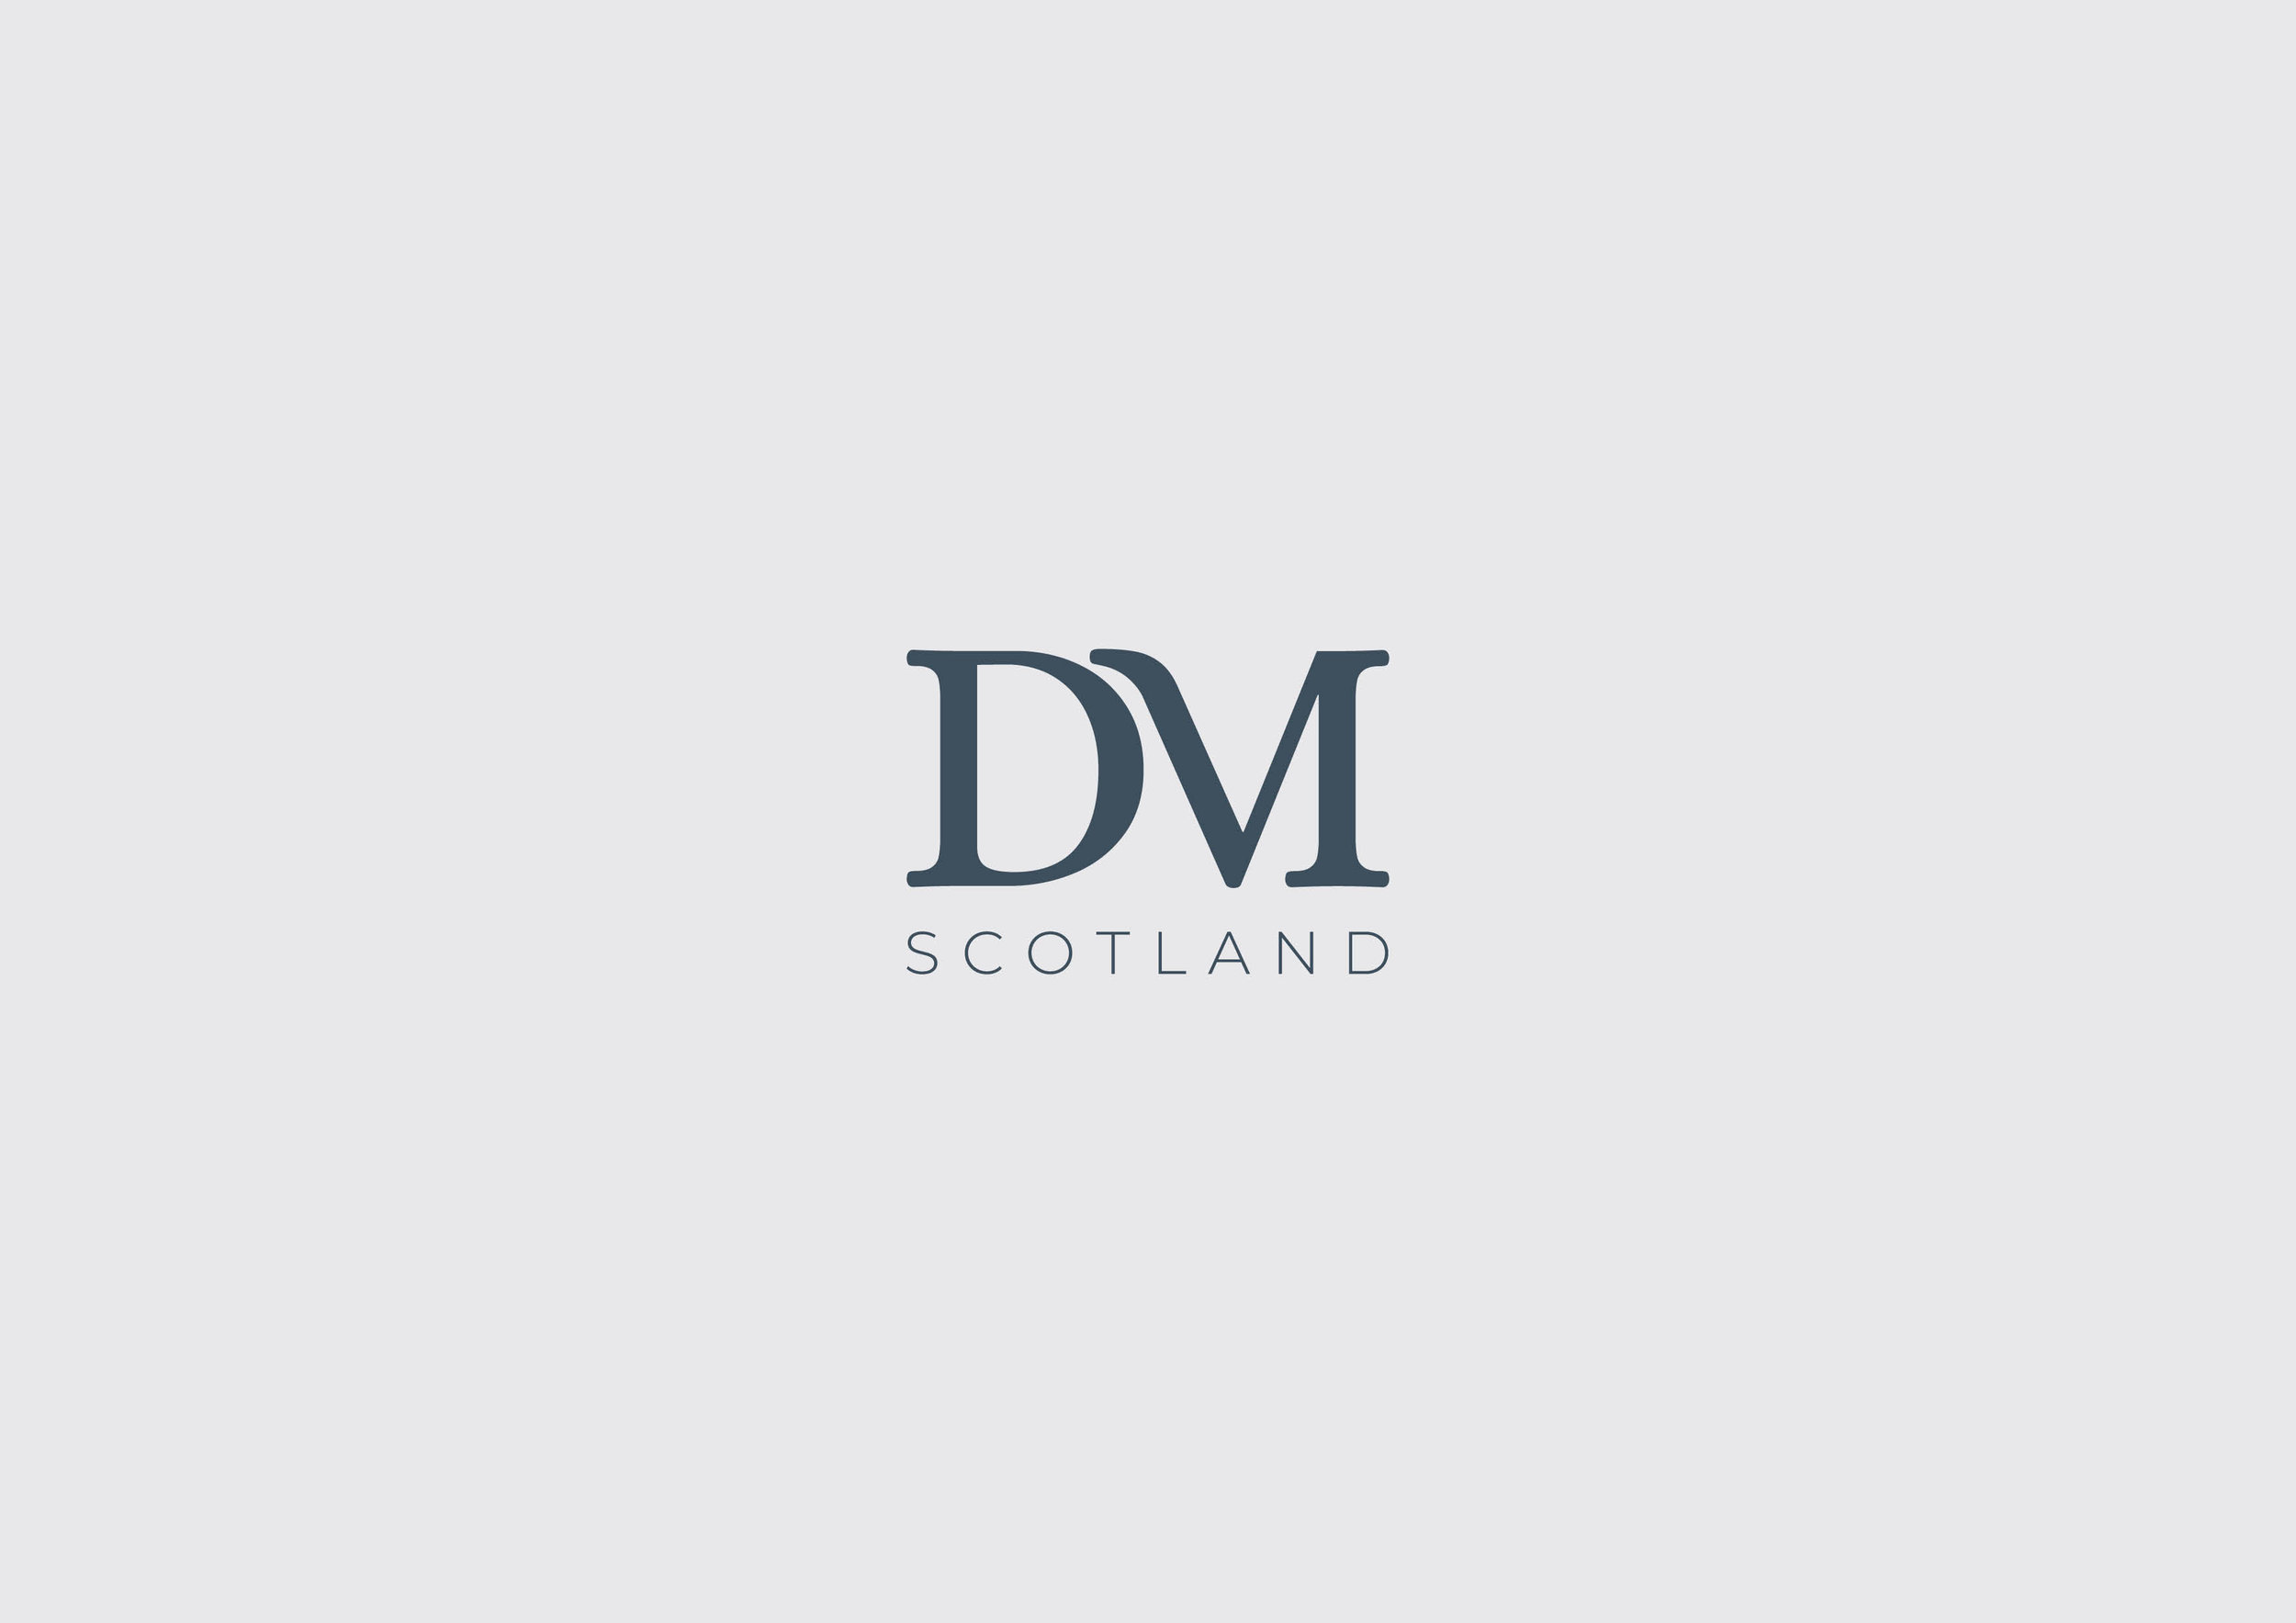 DMScotland_Logos.jpg